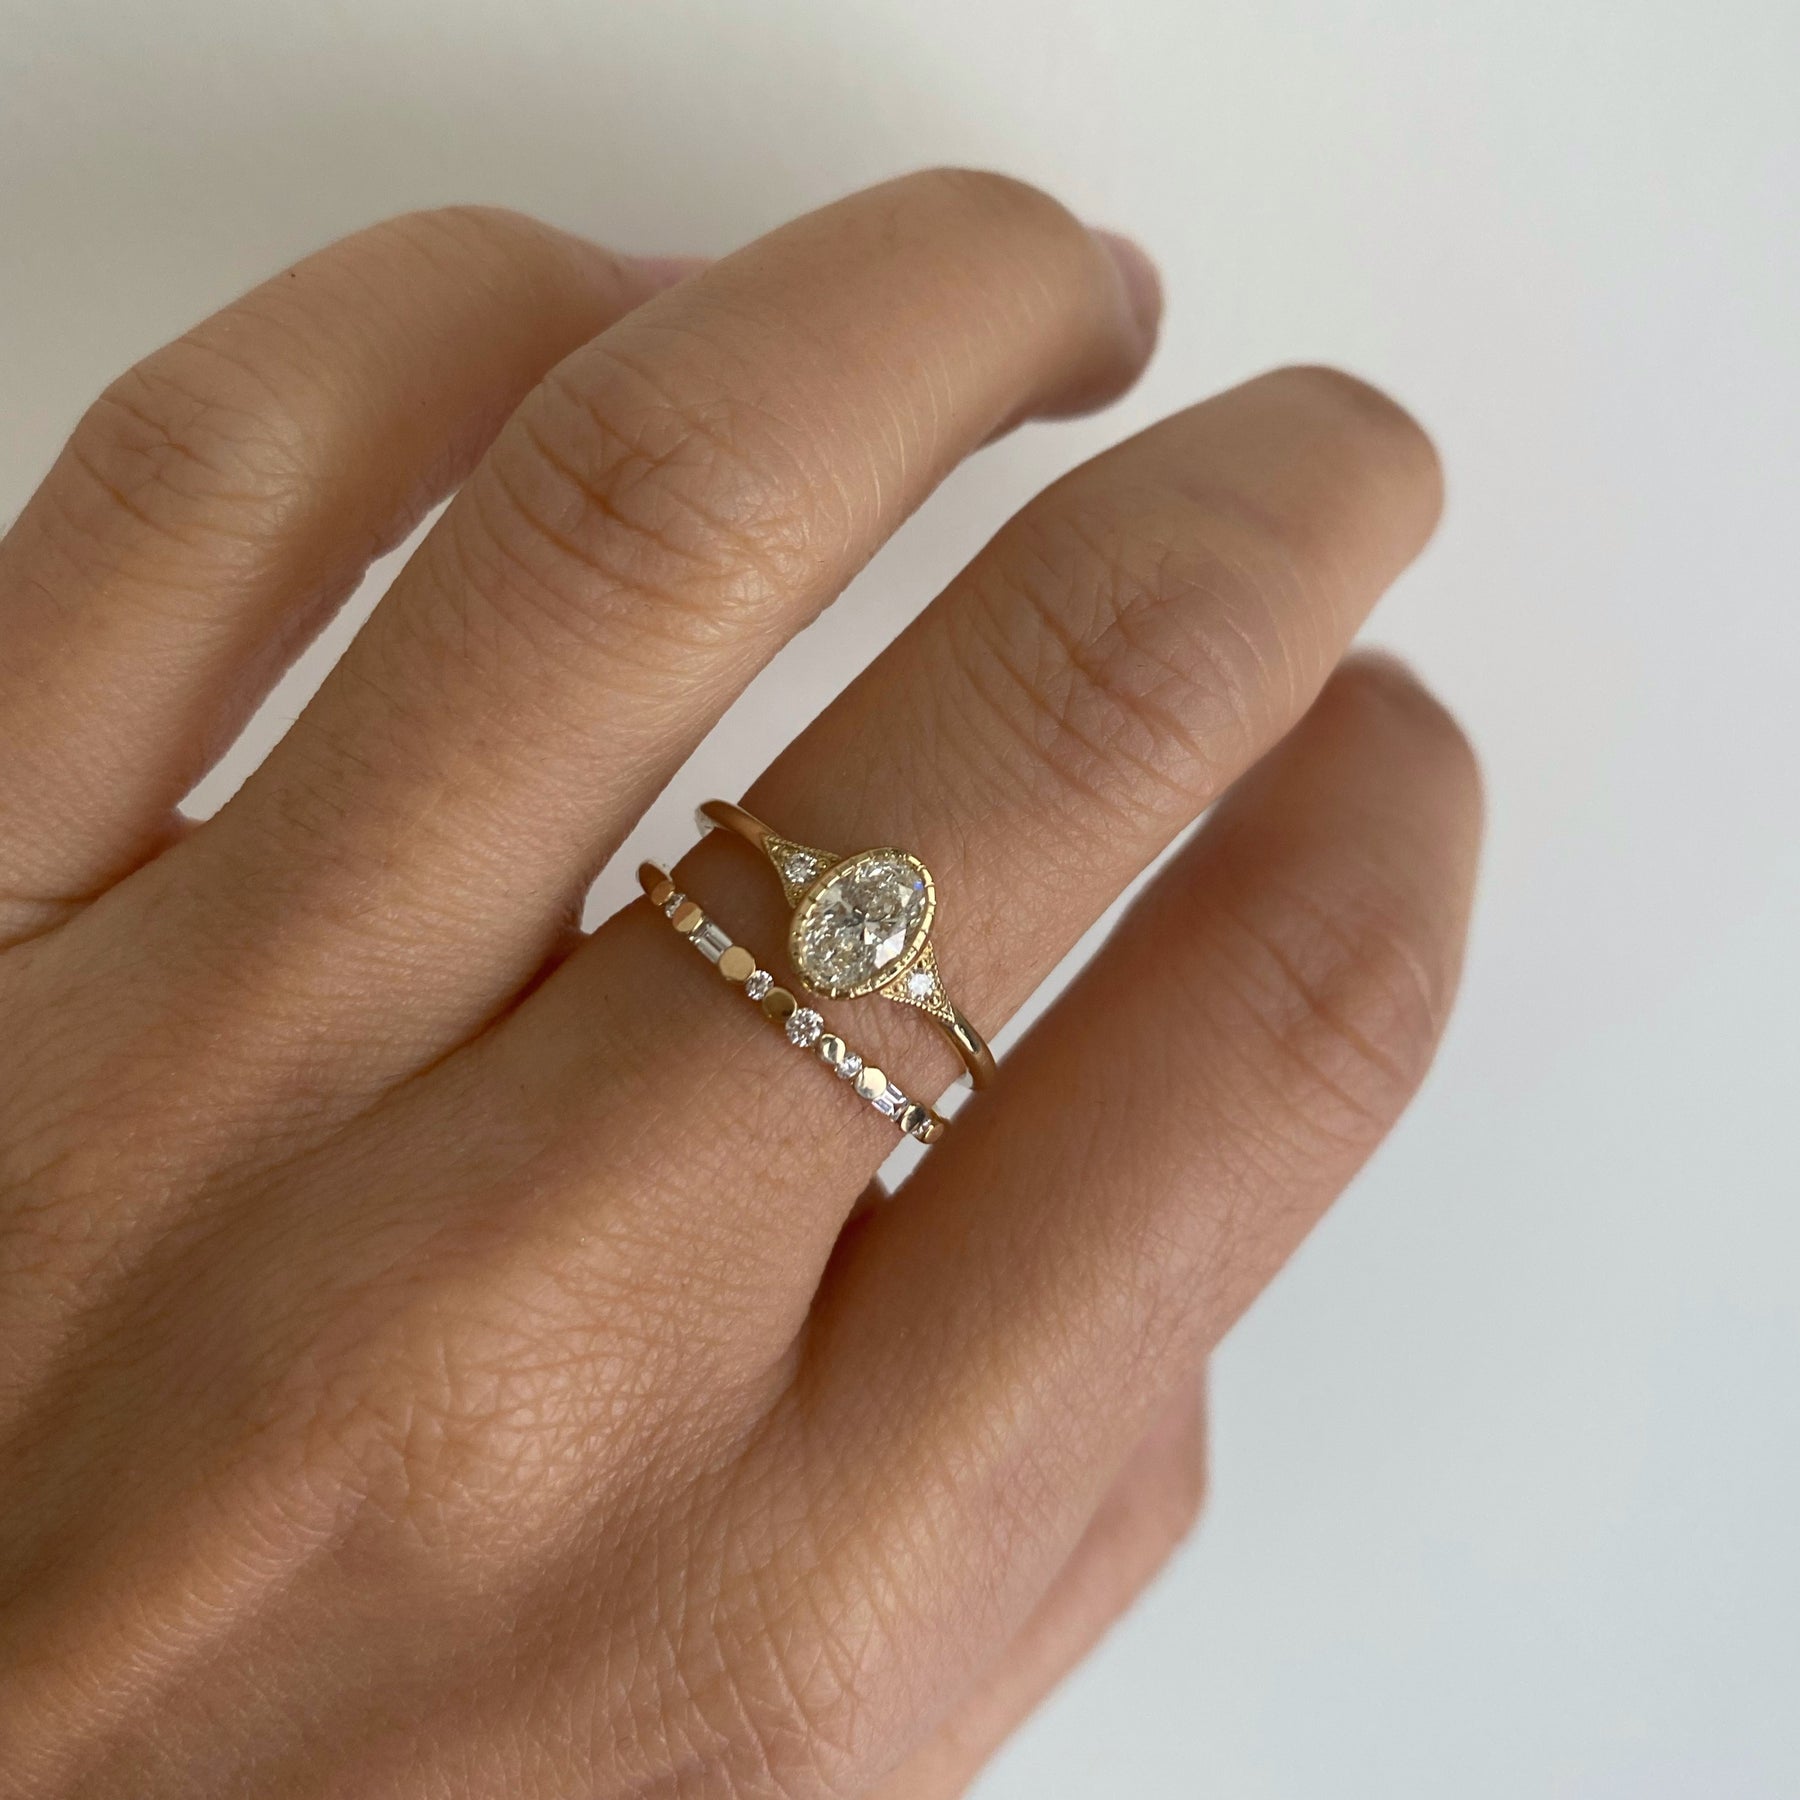 DIAMOND ETUDE RING